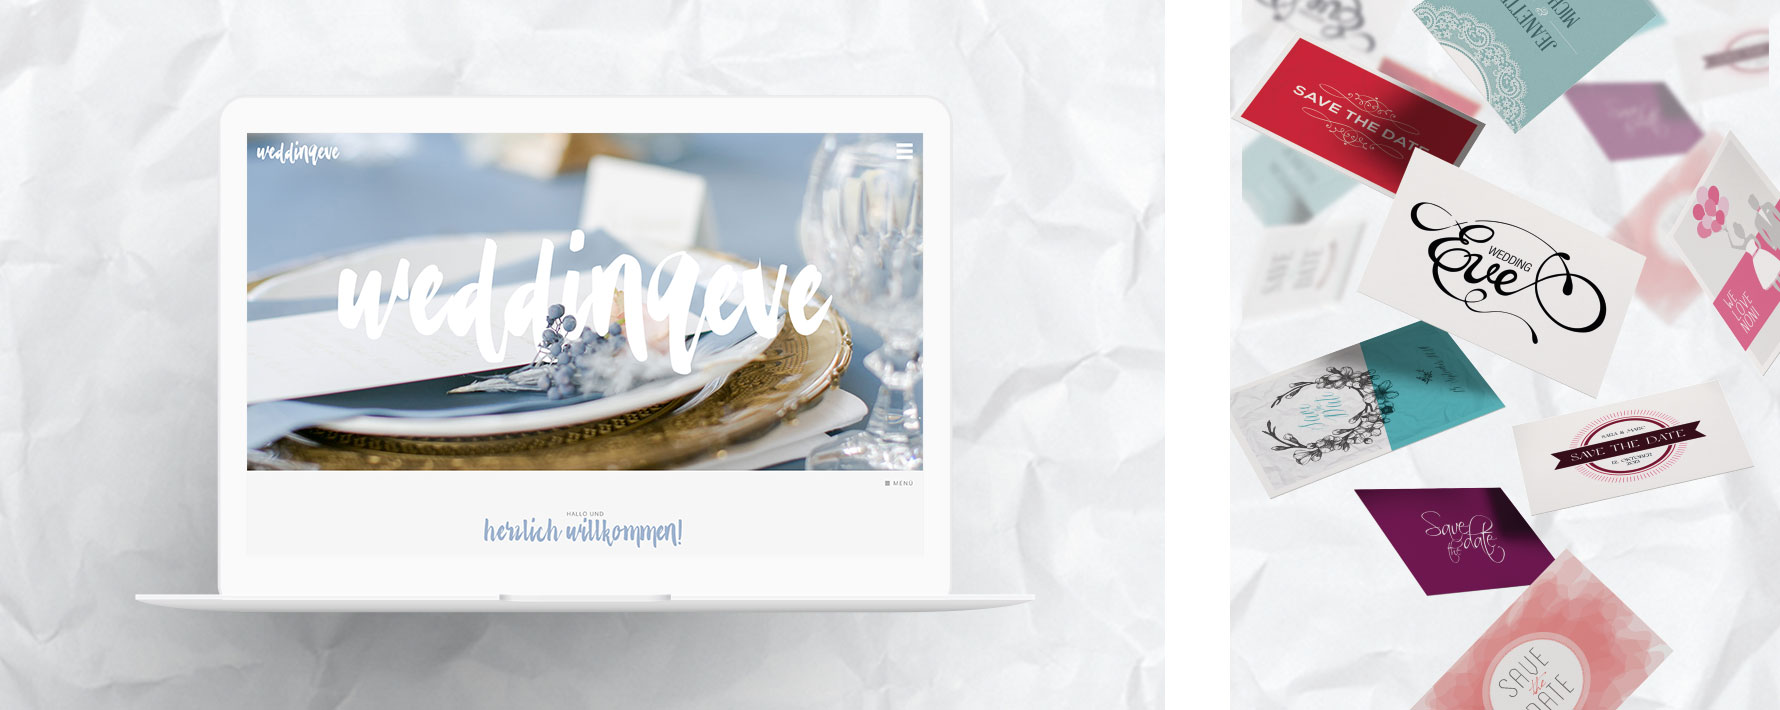 Hüfner Design | Referenz WeddingEve | Corporate Identity | Webdesign